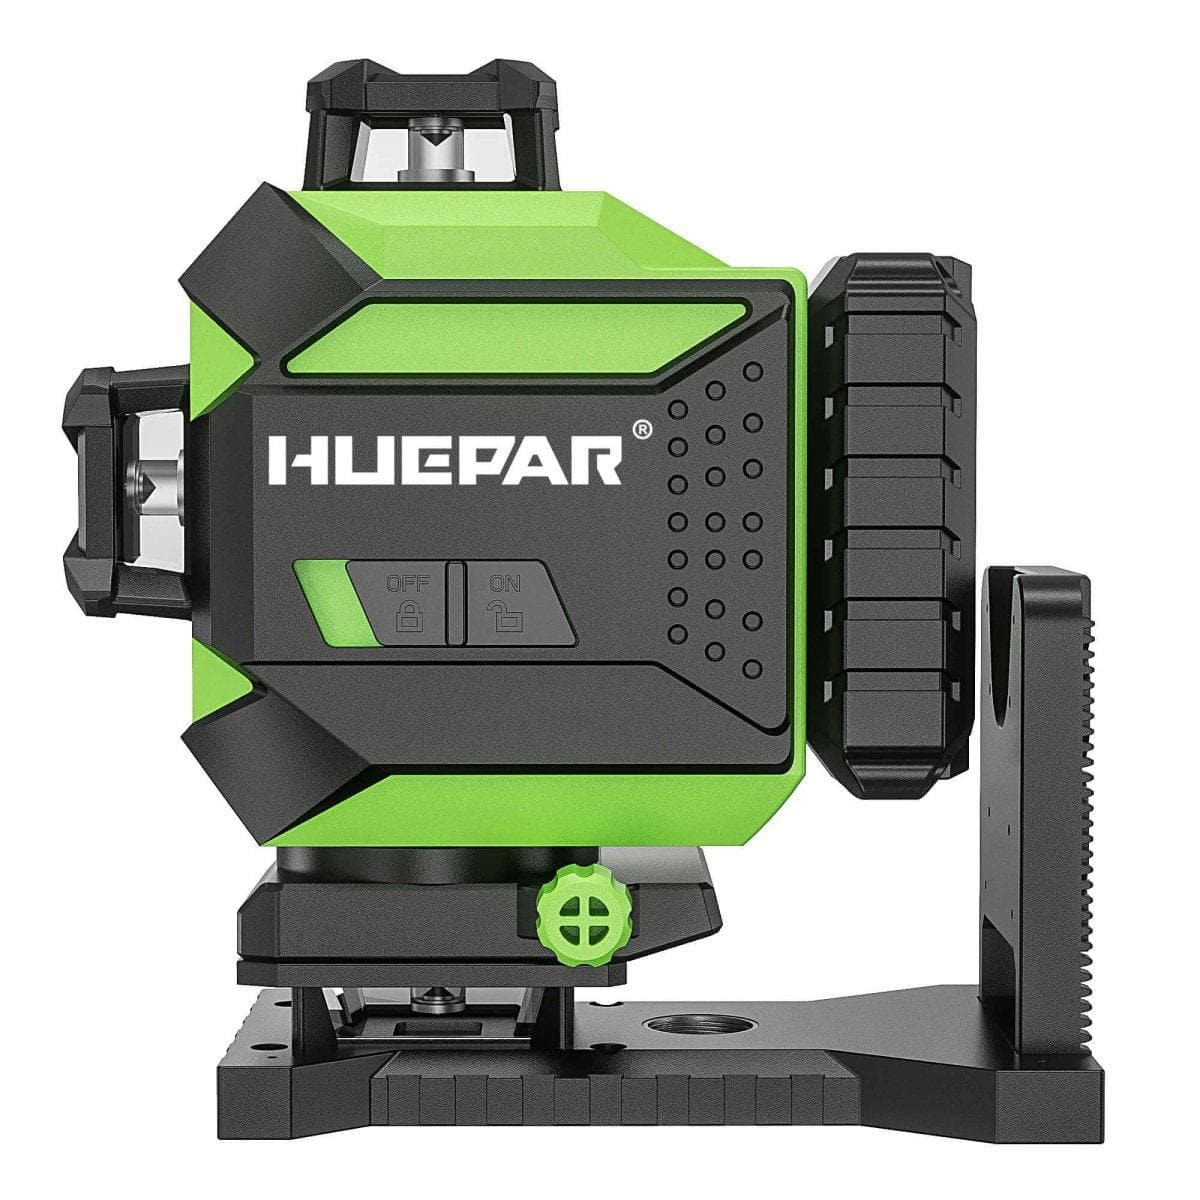 Huepar P04CG - 4 x 360° Self-Leveling Cross Line Laser